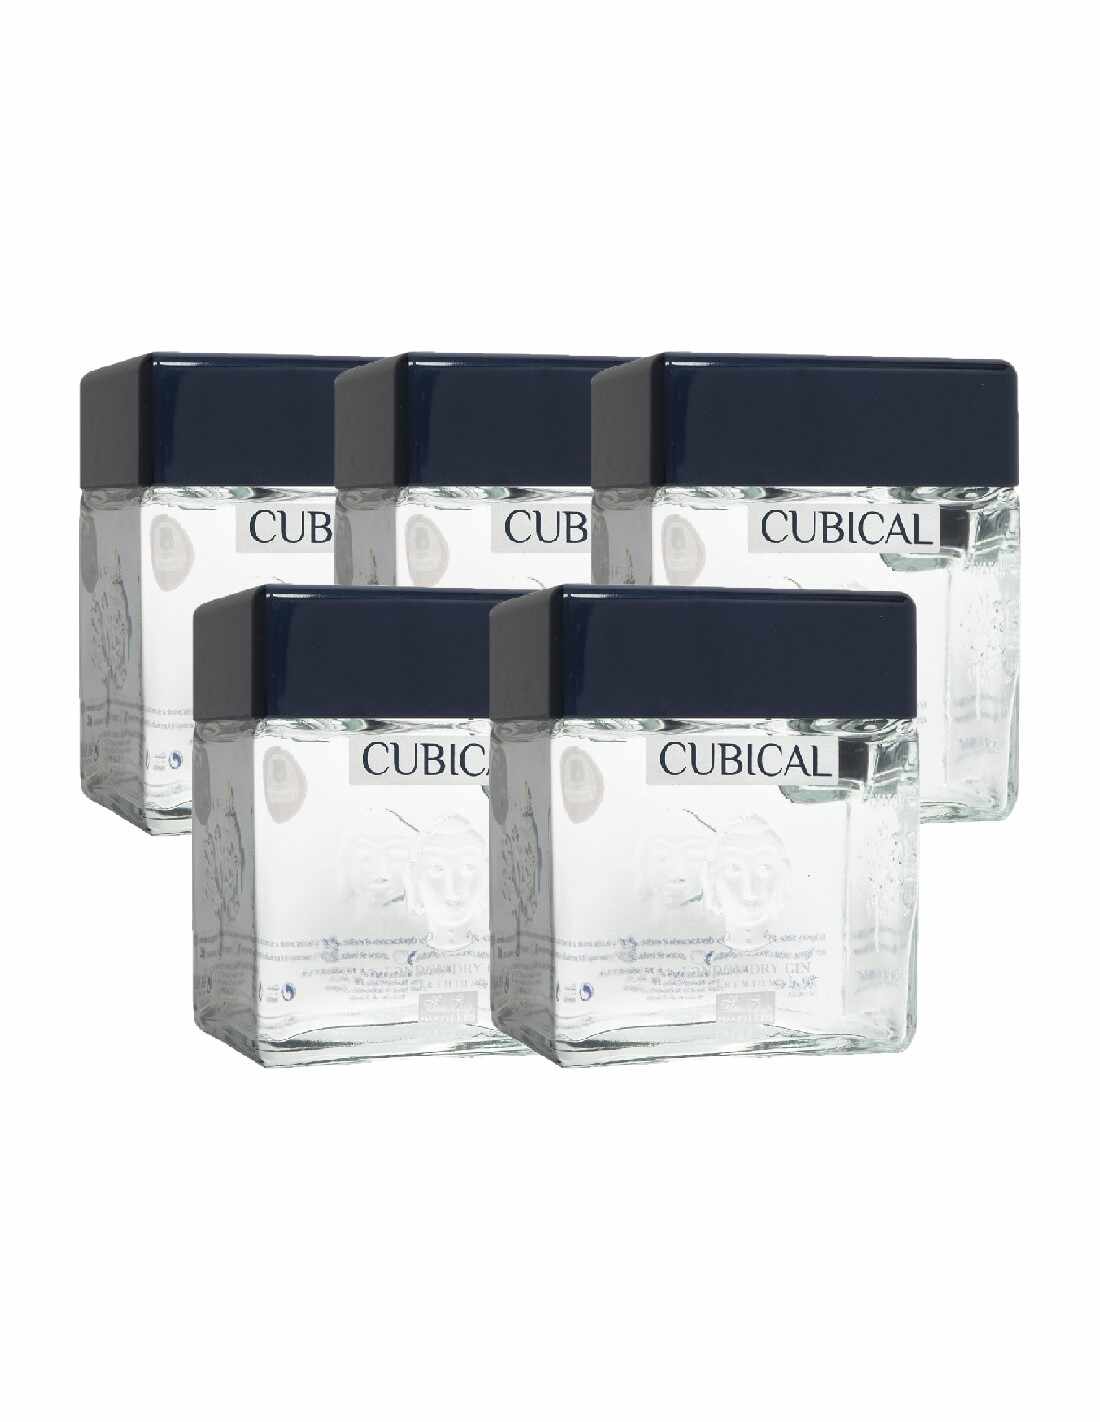 Pachet 5 sticle Gin Botanic Premium Cubical 40% alc., 0.7L, Spania